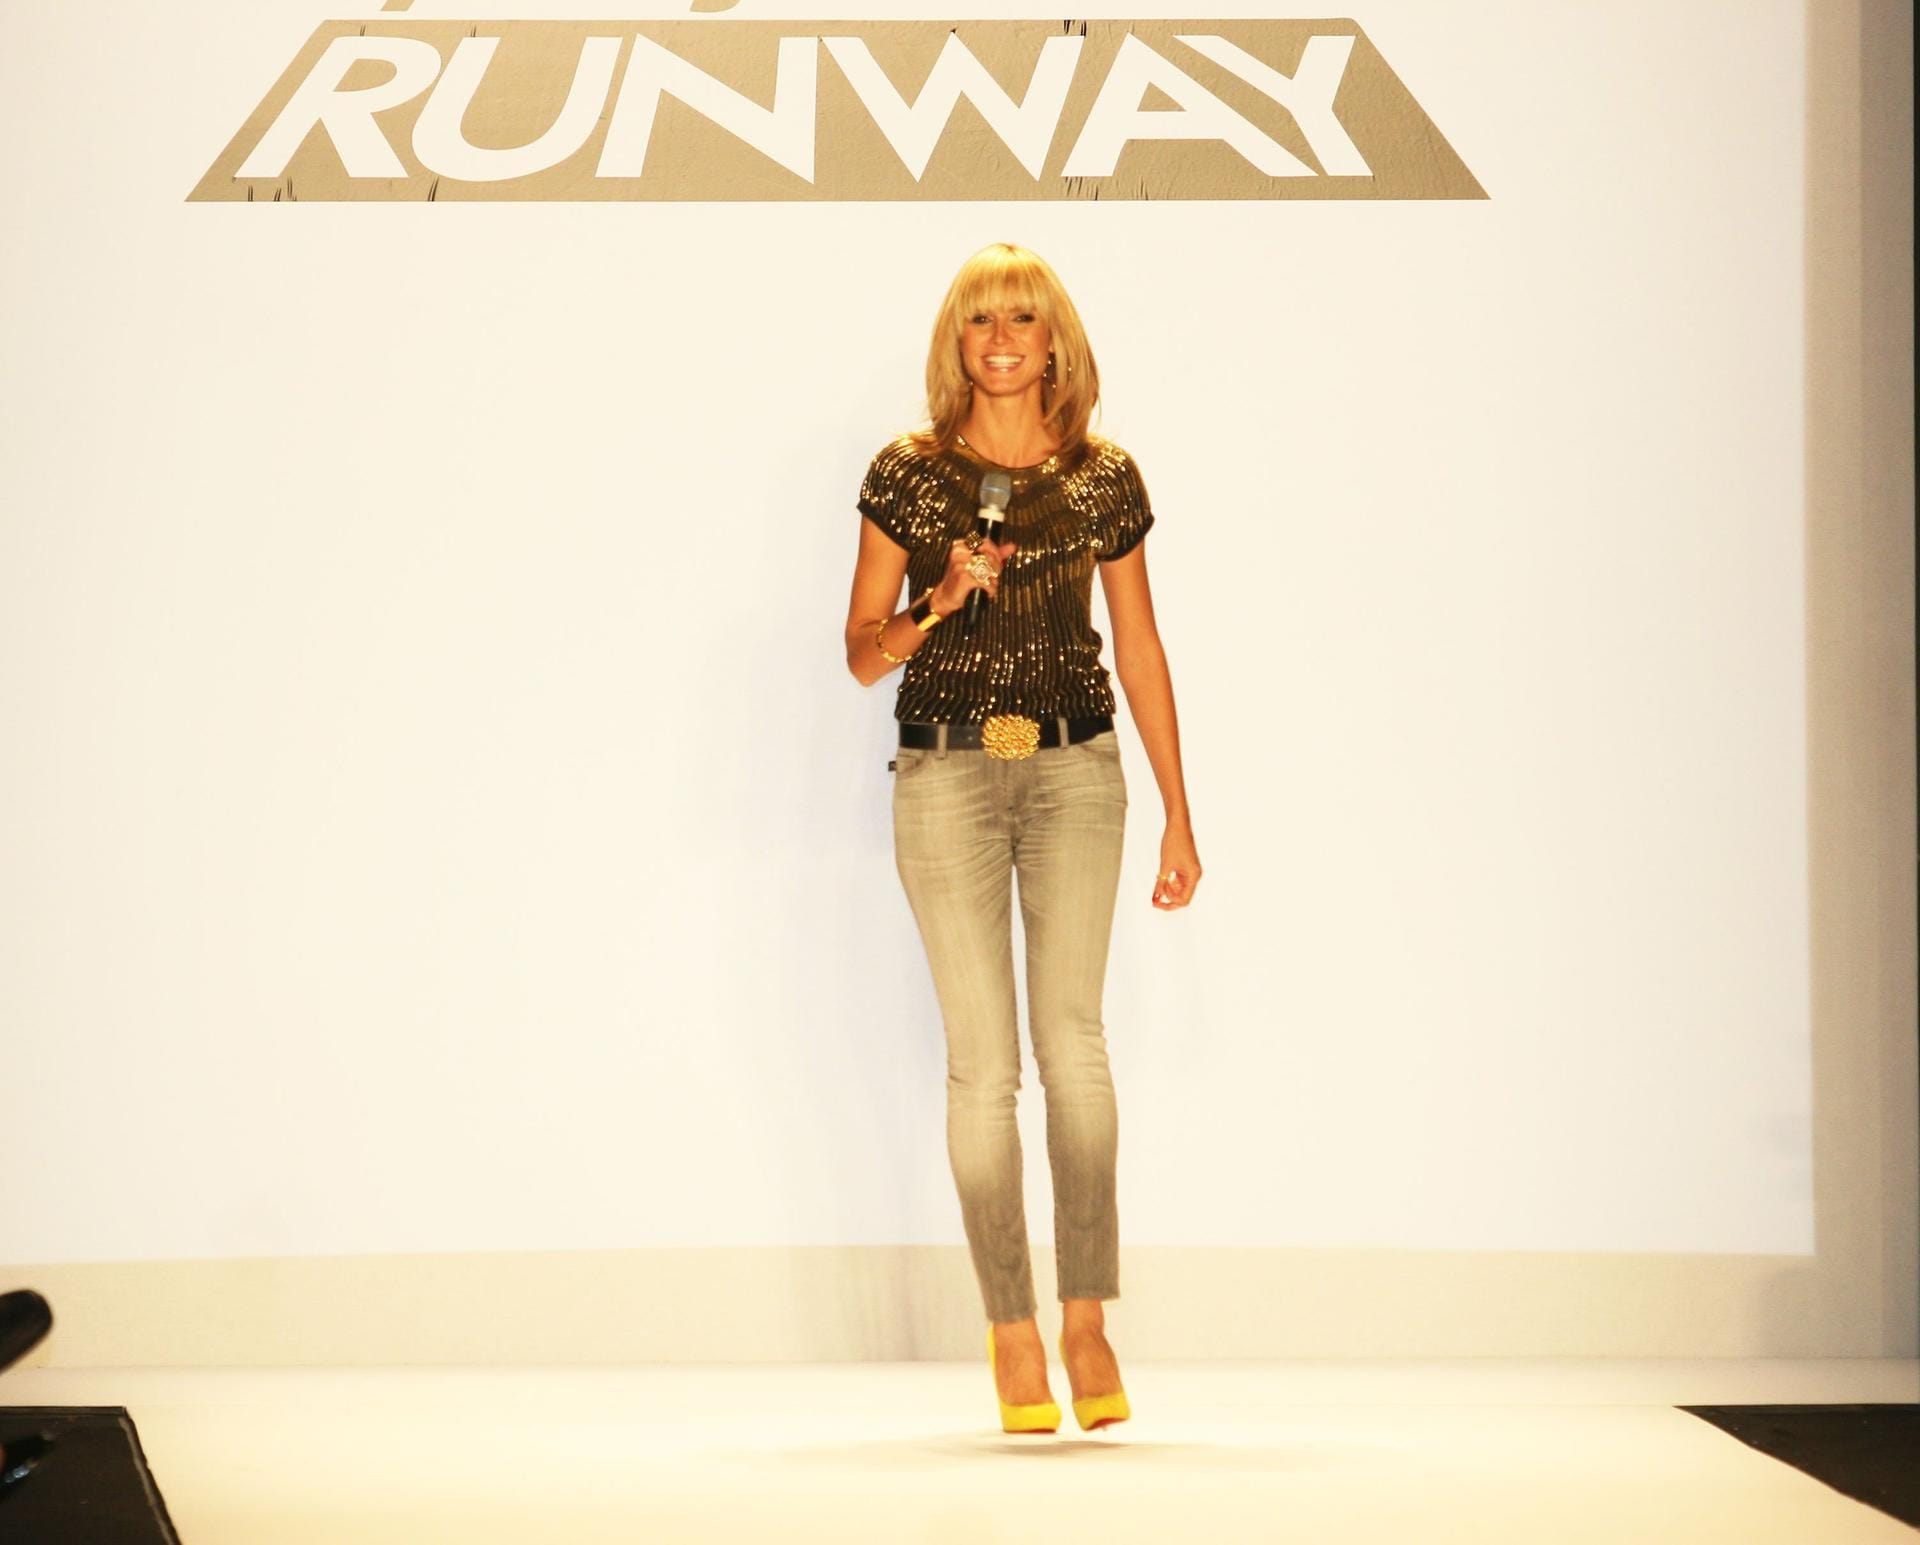 "Projekt Runway": In den USA hat Heidi ihr eigens TV-Format.